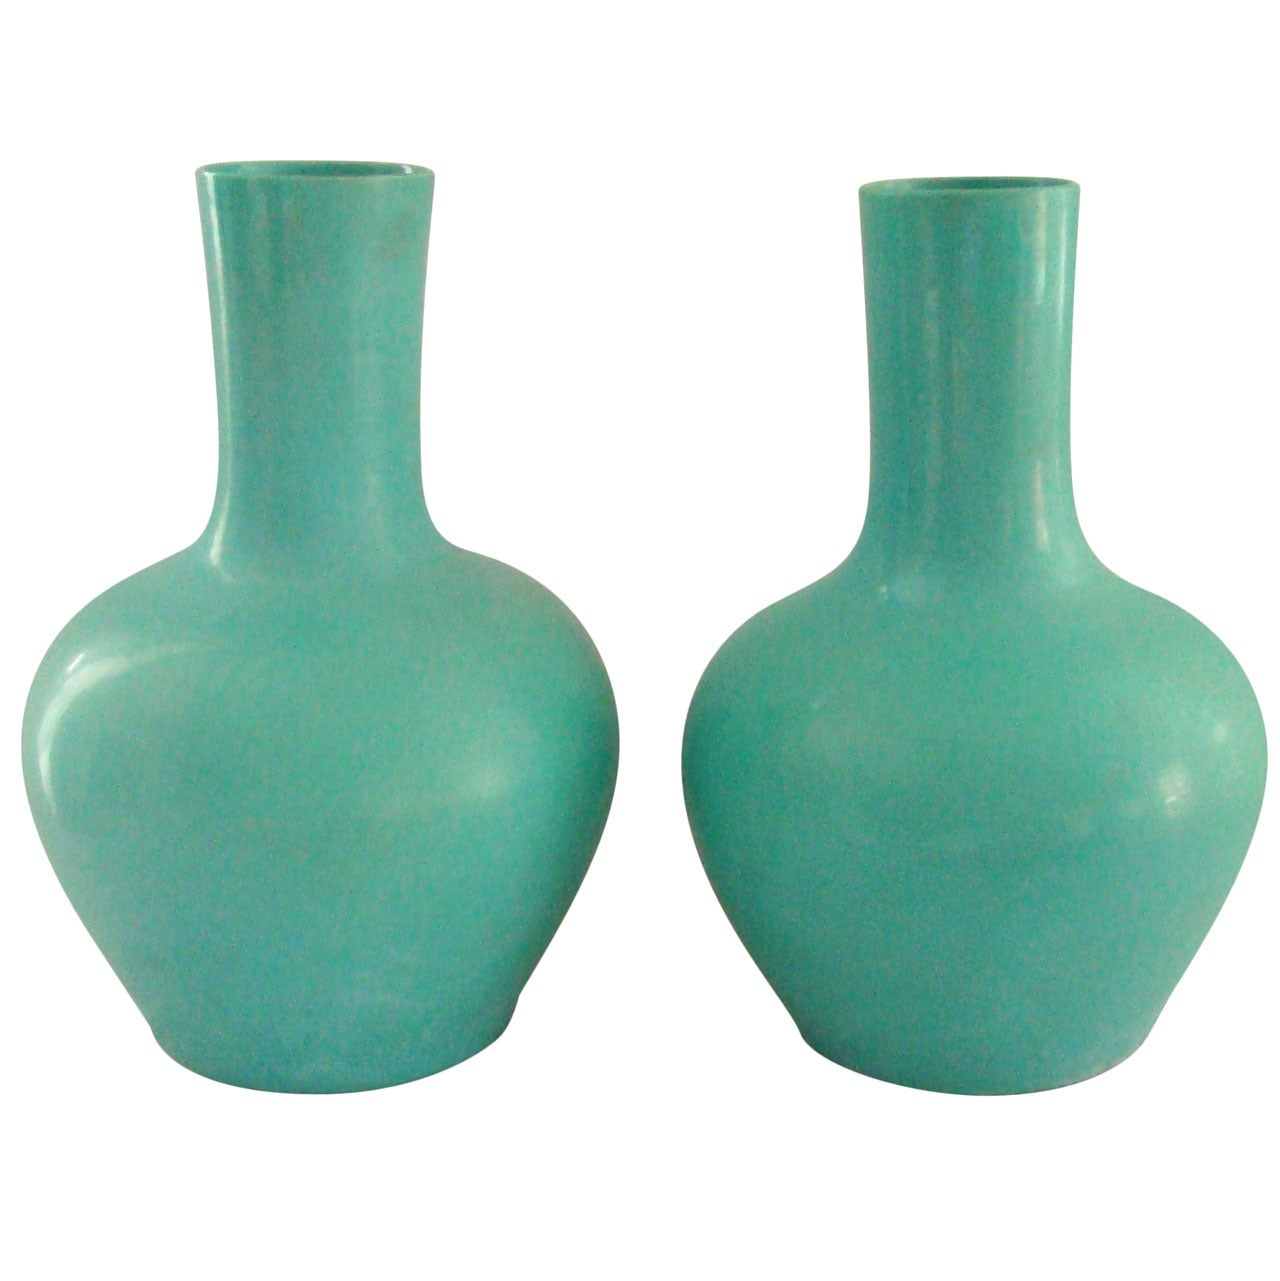 Large Pair of 1950s Aqua Porcelain Urns